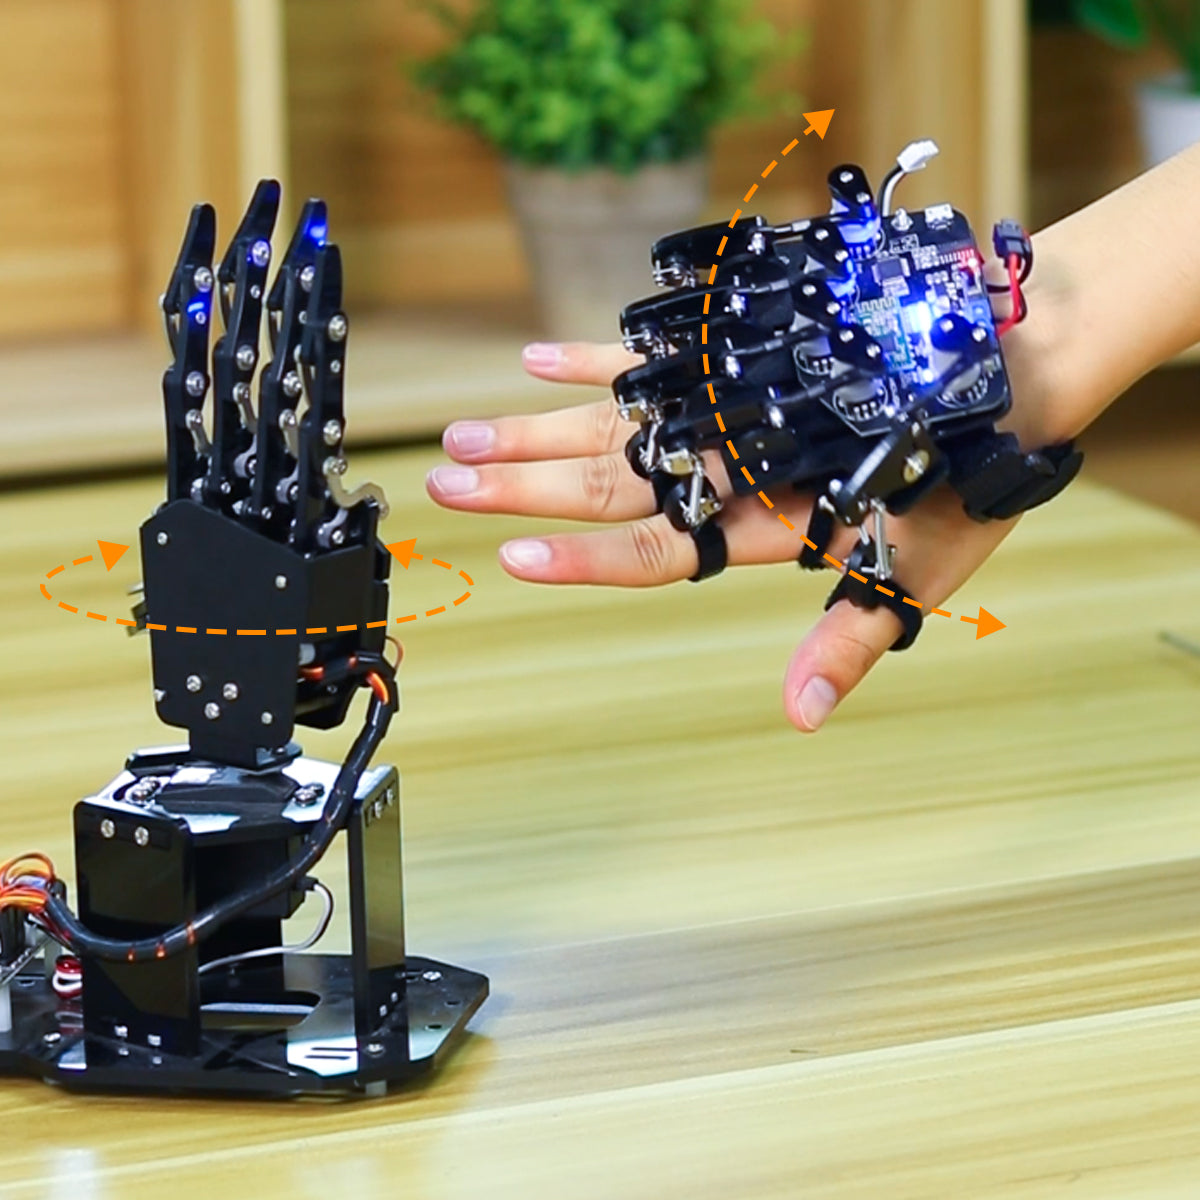 Hiwonder Wireless Glove Open-source Somatosensory Mechanical Glove for Robot Control